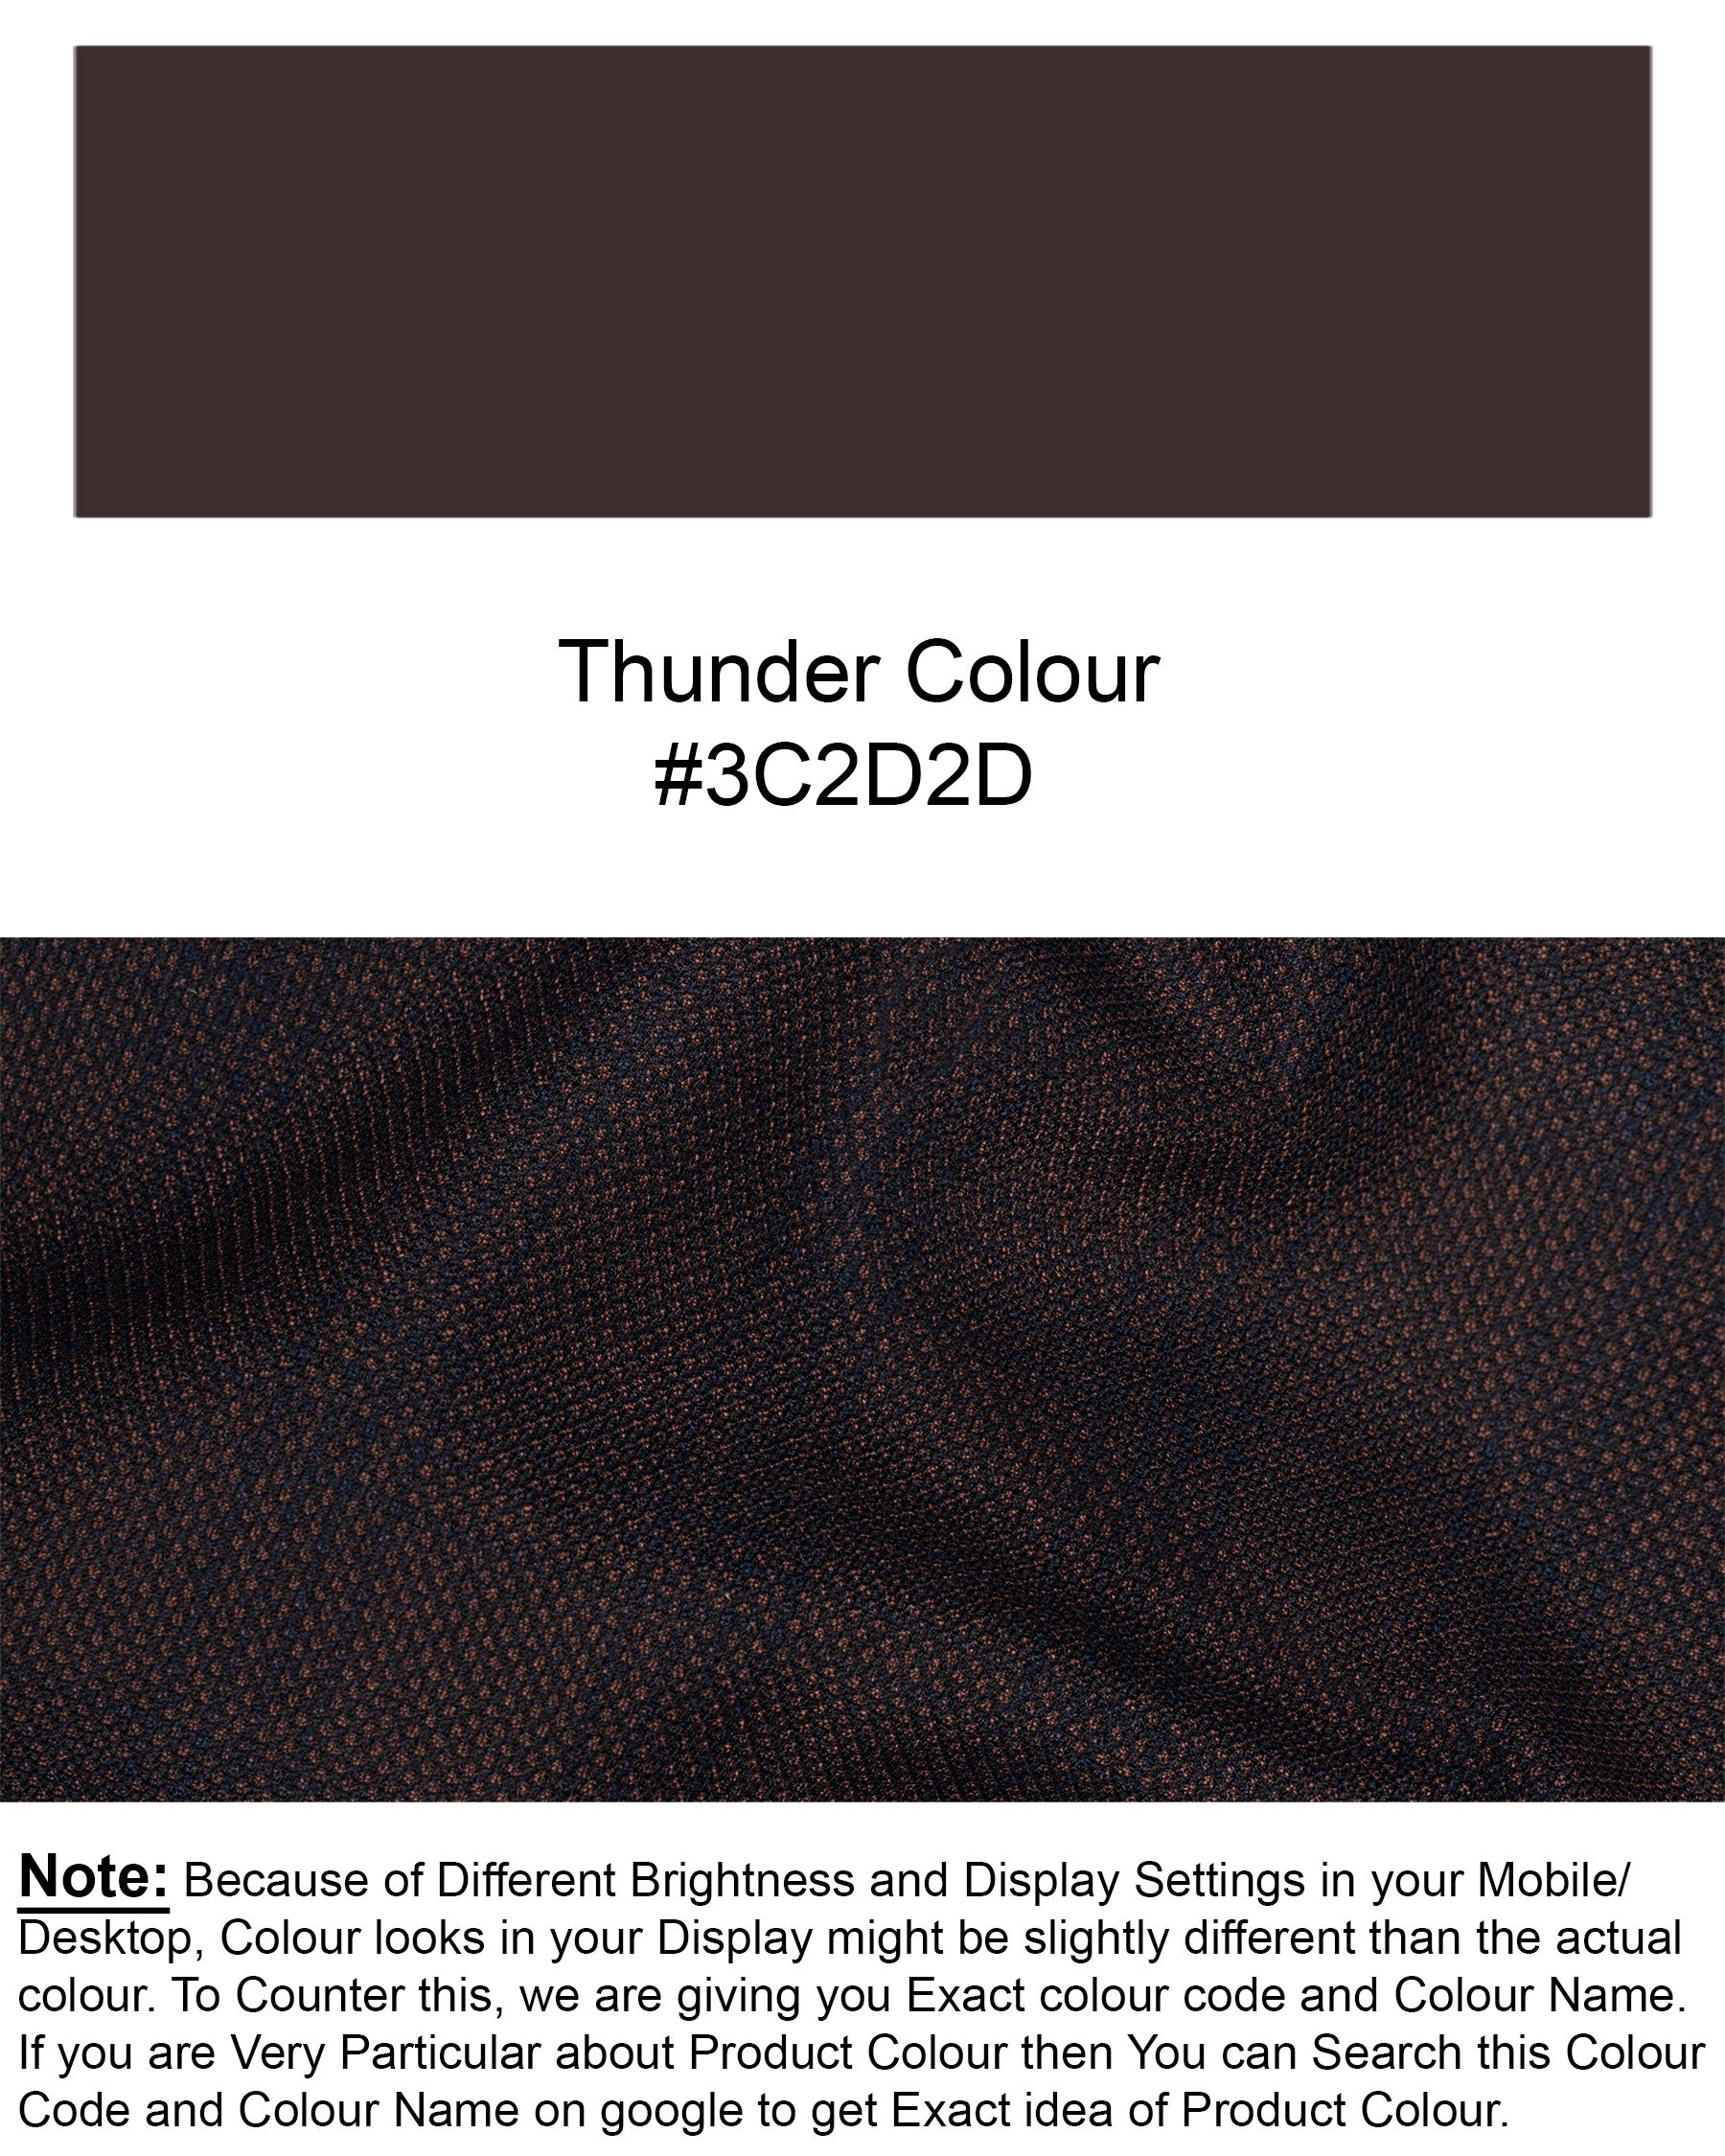 Thunder Brown Subtle Checkered Woolrich Cross buttoned Bandhgala Suit ST1625-CBG2-36, ST1625-CBG2-38, ST1625-CBG2-40, ST1625-CBG2-42, ST1625-CBG2-44, ST1625-CBG2-46, ST1625-CBG2-48, ST1625-CBG2-50, ST1625-CBG2-52, ST1625-CBG2-54, ST1625-CBG2-56, ST1625-CBG2-58, ST1625-CBG2-60